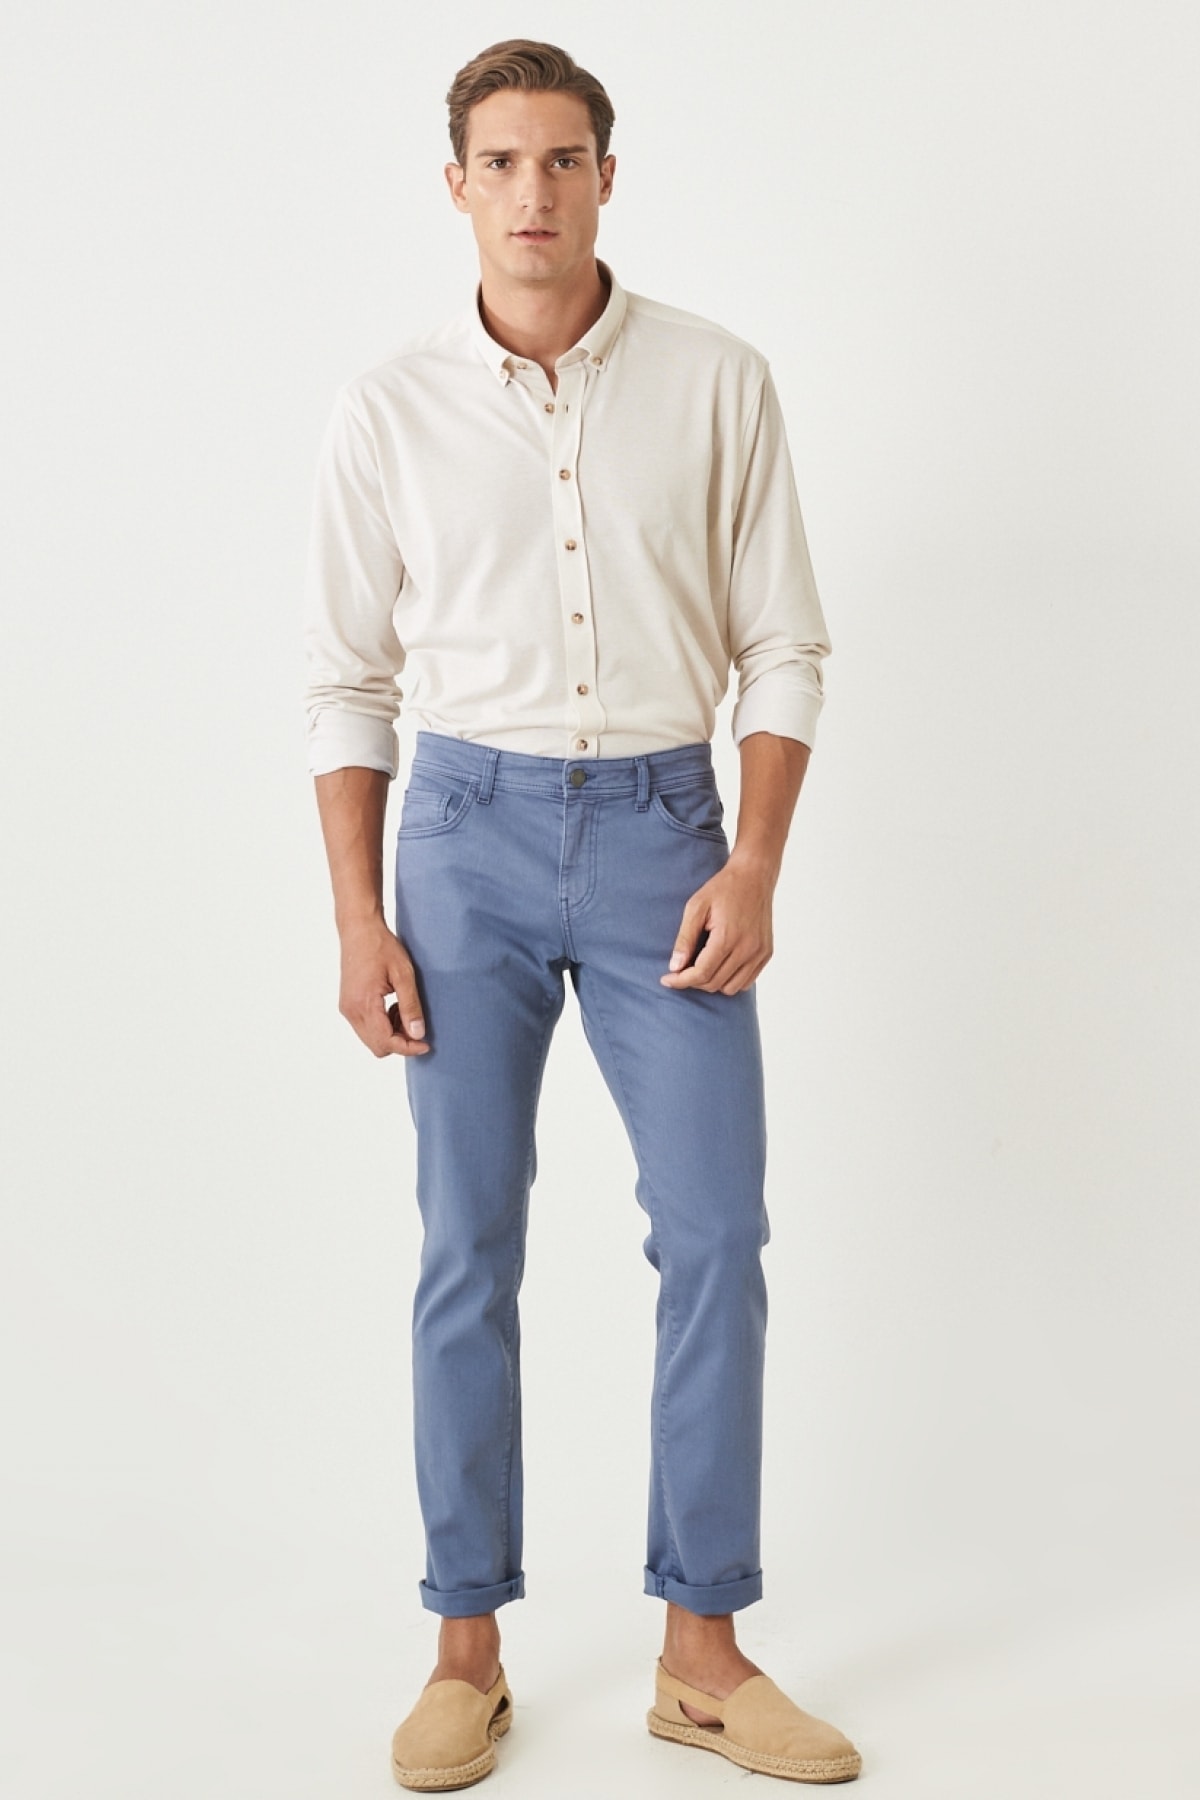 ALTINYILDIZ CLASSICS Men's Indigo Slim Fit Slim Fit Cotton Comfort Trousers that 360 Degree Stretches in All Directions.